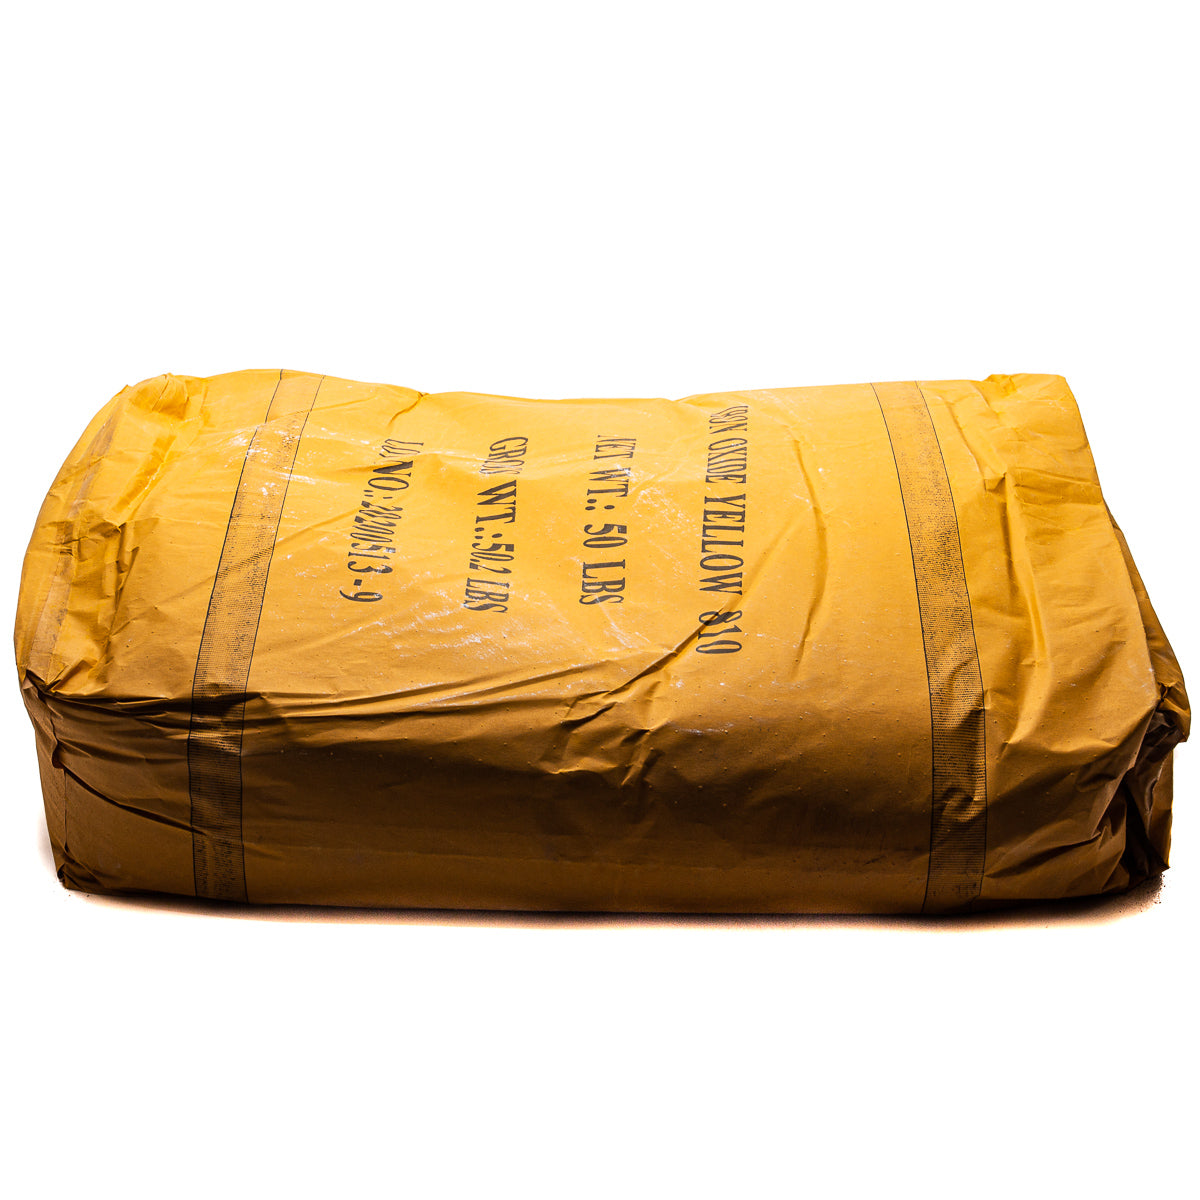 Yellow Iron Oxide - Buy Bulk  Essential Wholesale - Buy Wholesale